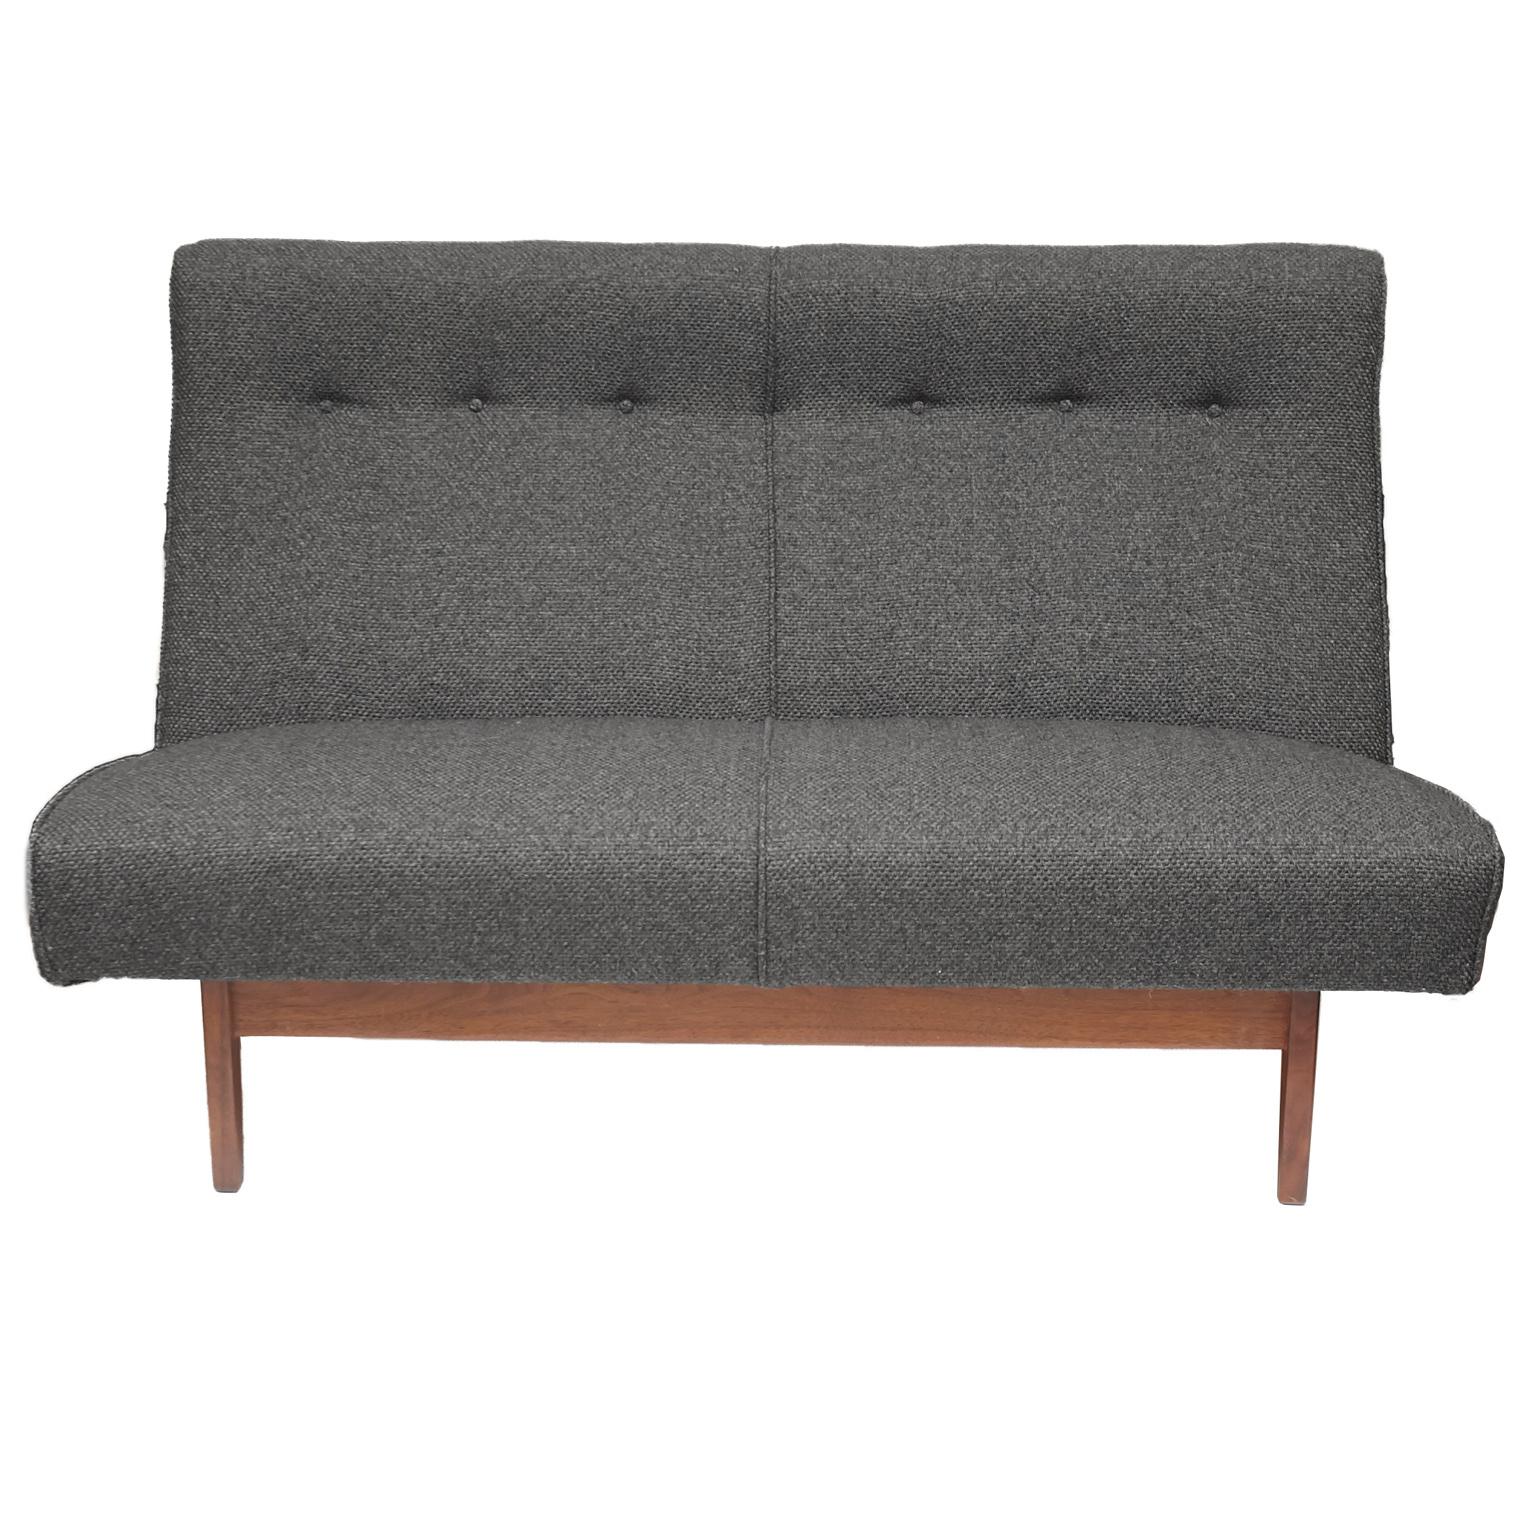 Fabric Jens Risom Charcoal Grey Sofa and Matching Love Seat Model U251